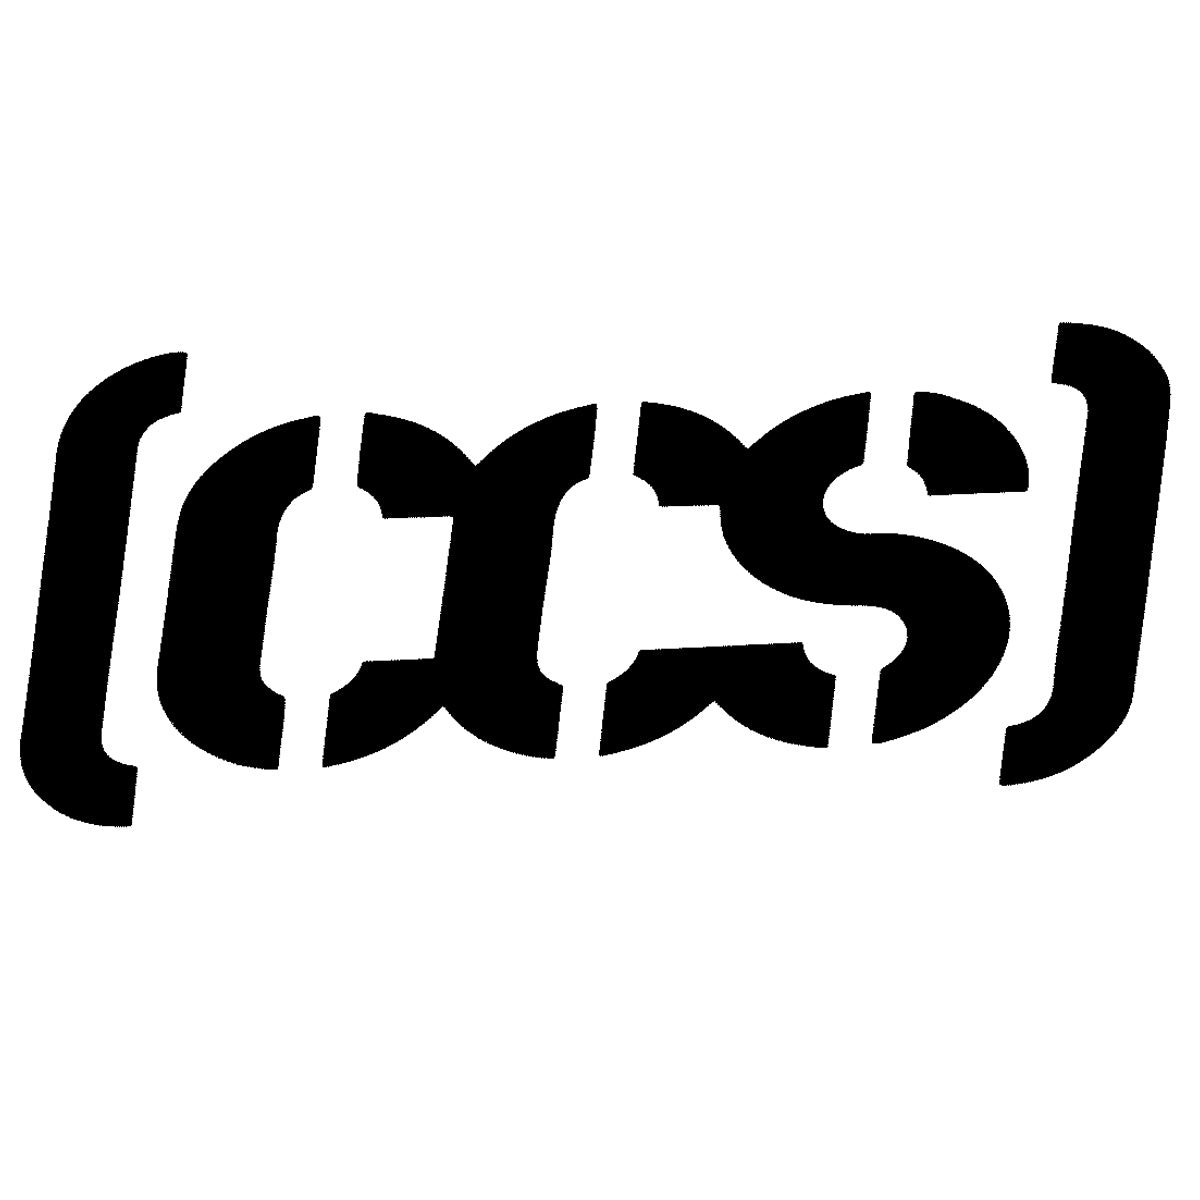 CCS Decal Sticker - Black image 1